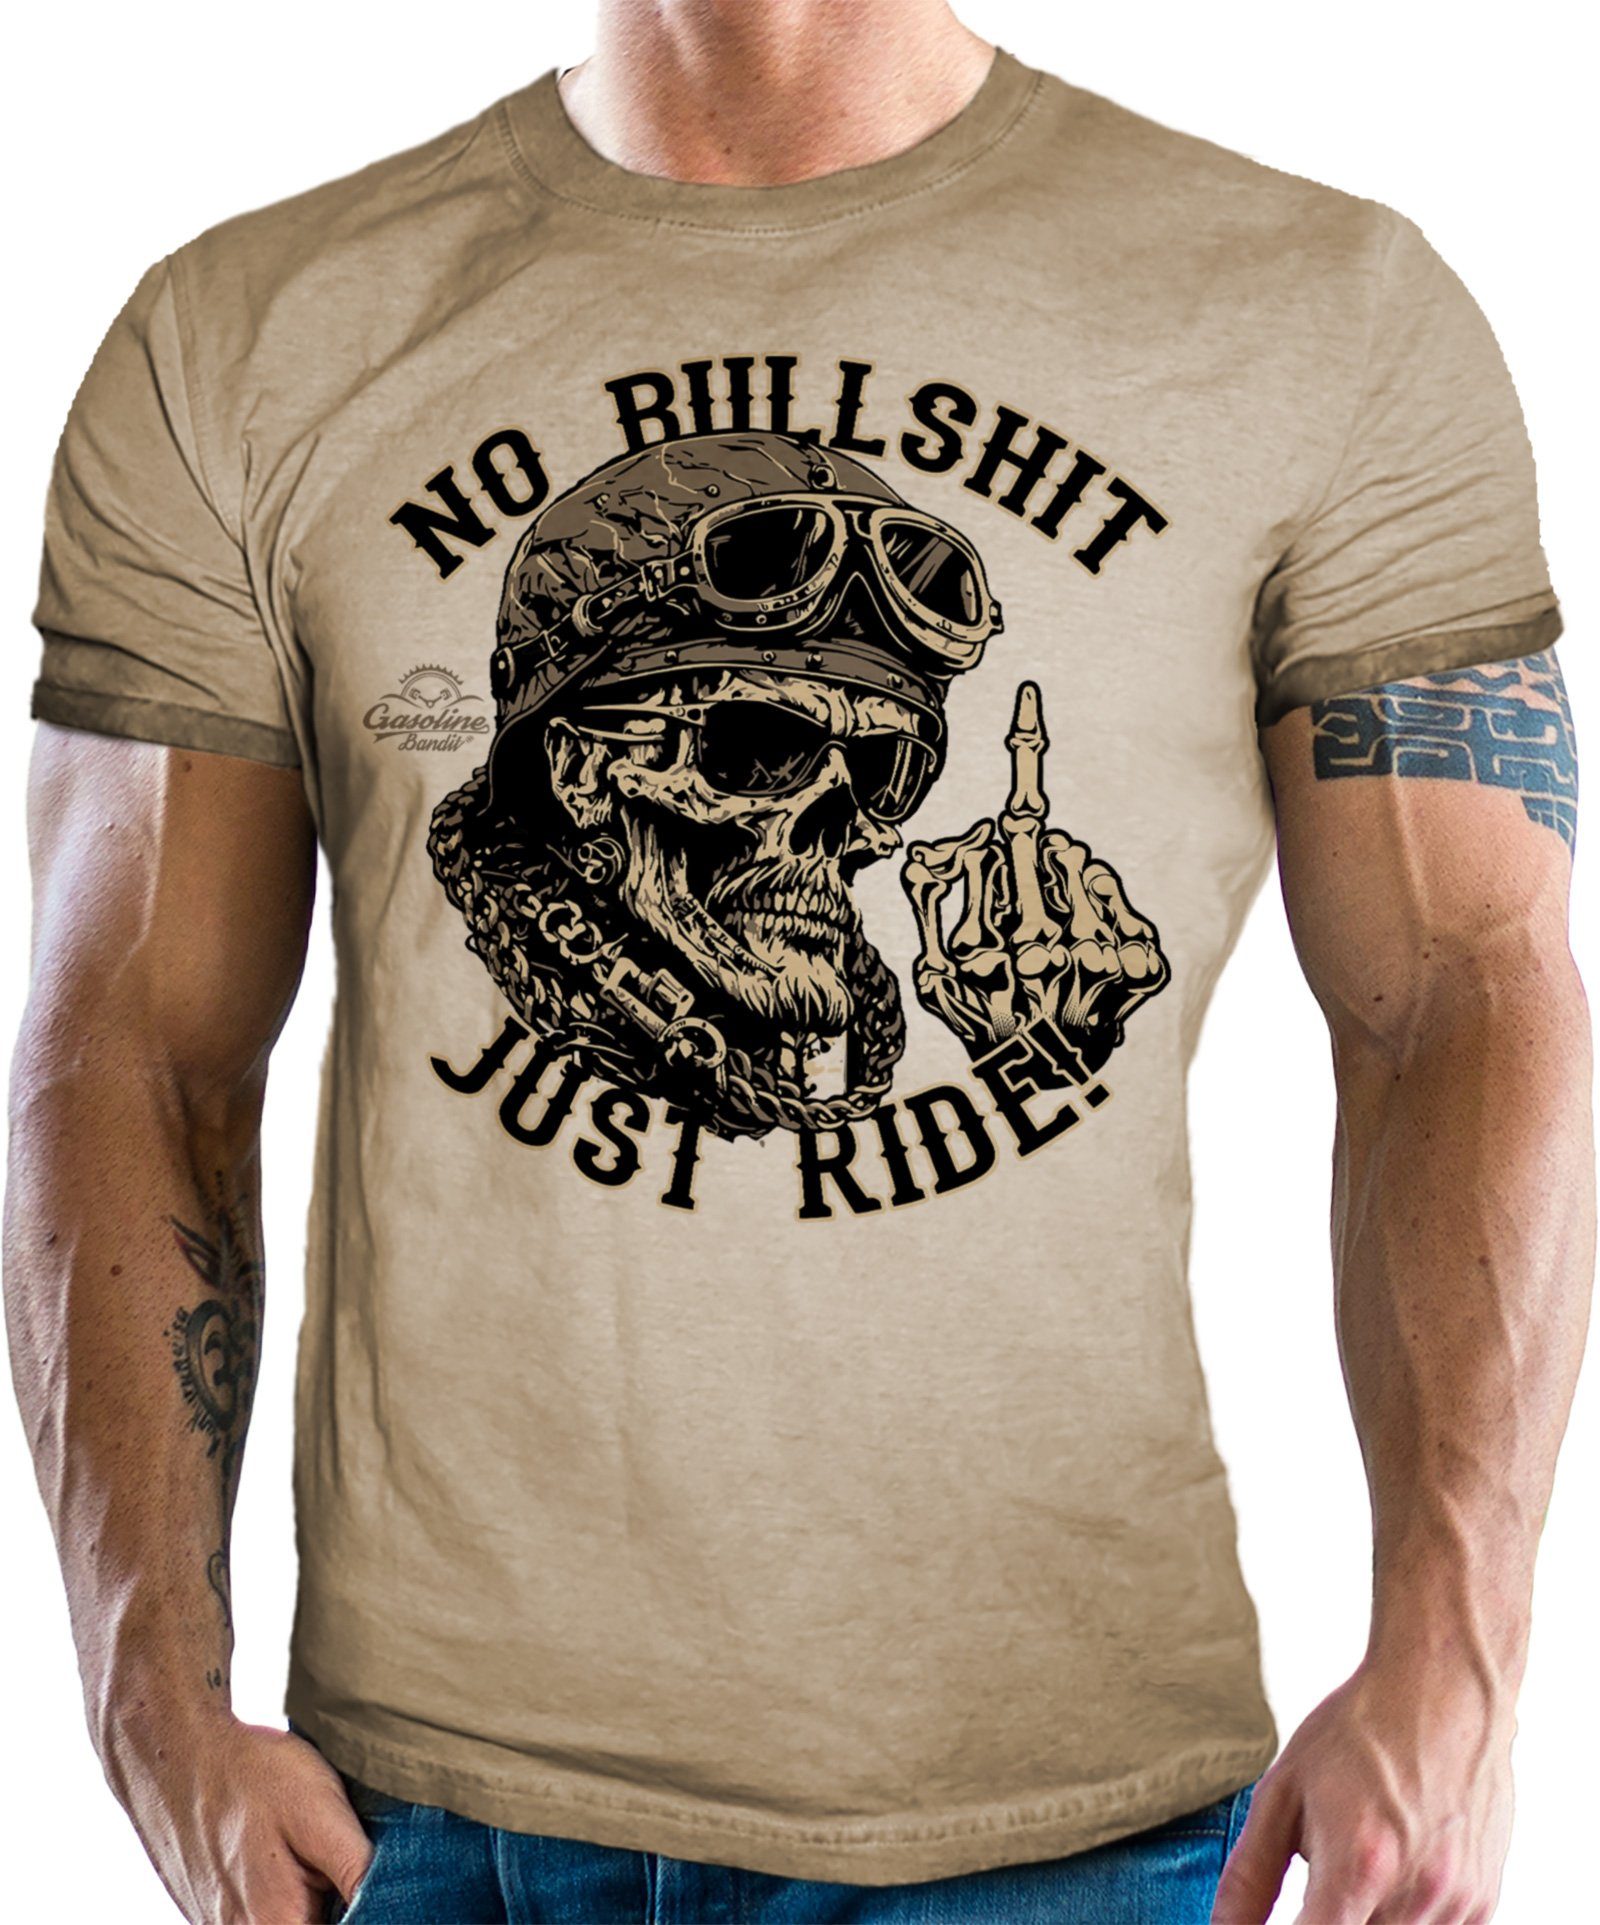 GASOLINE BANDIT® T-Shirt für Biker, Racer in Washed Used Look: Just Ride